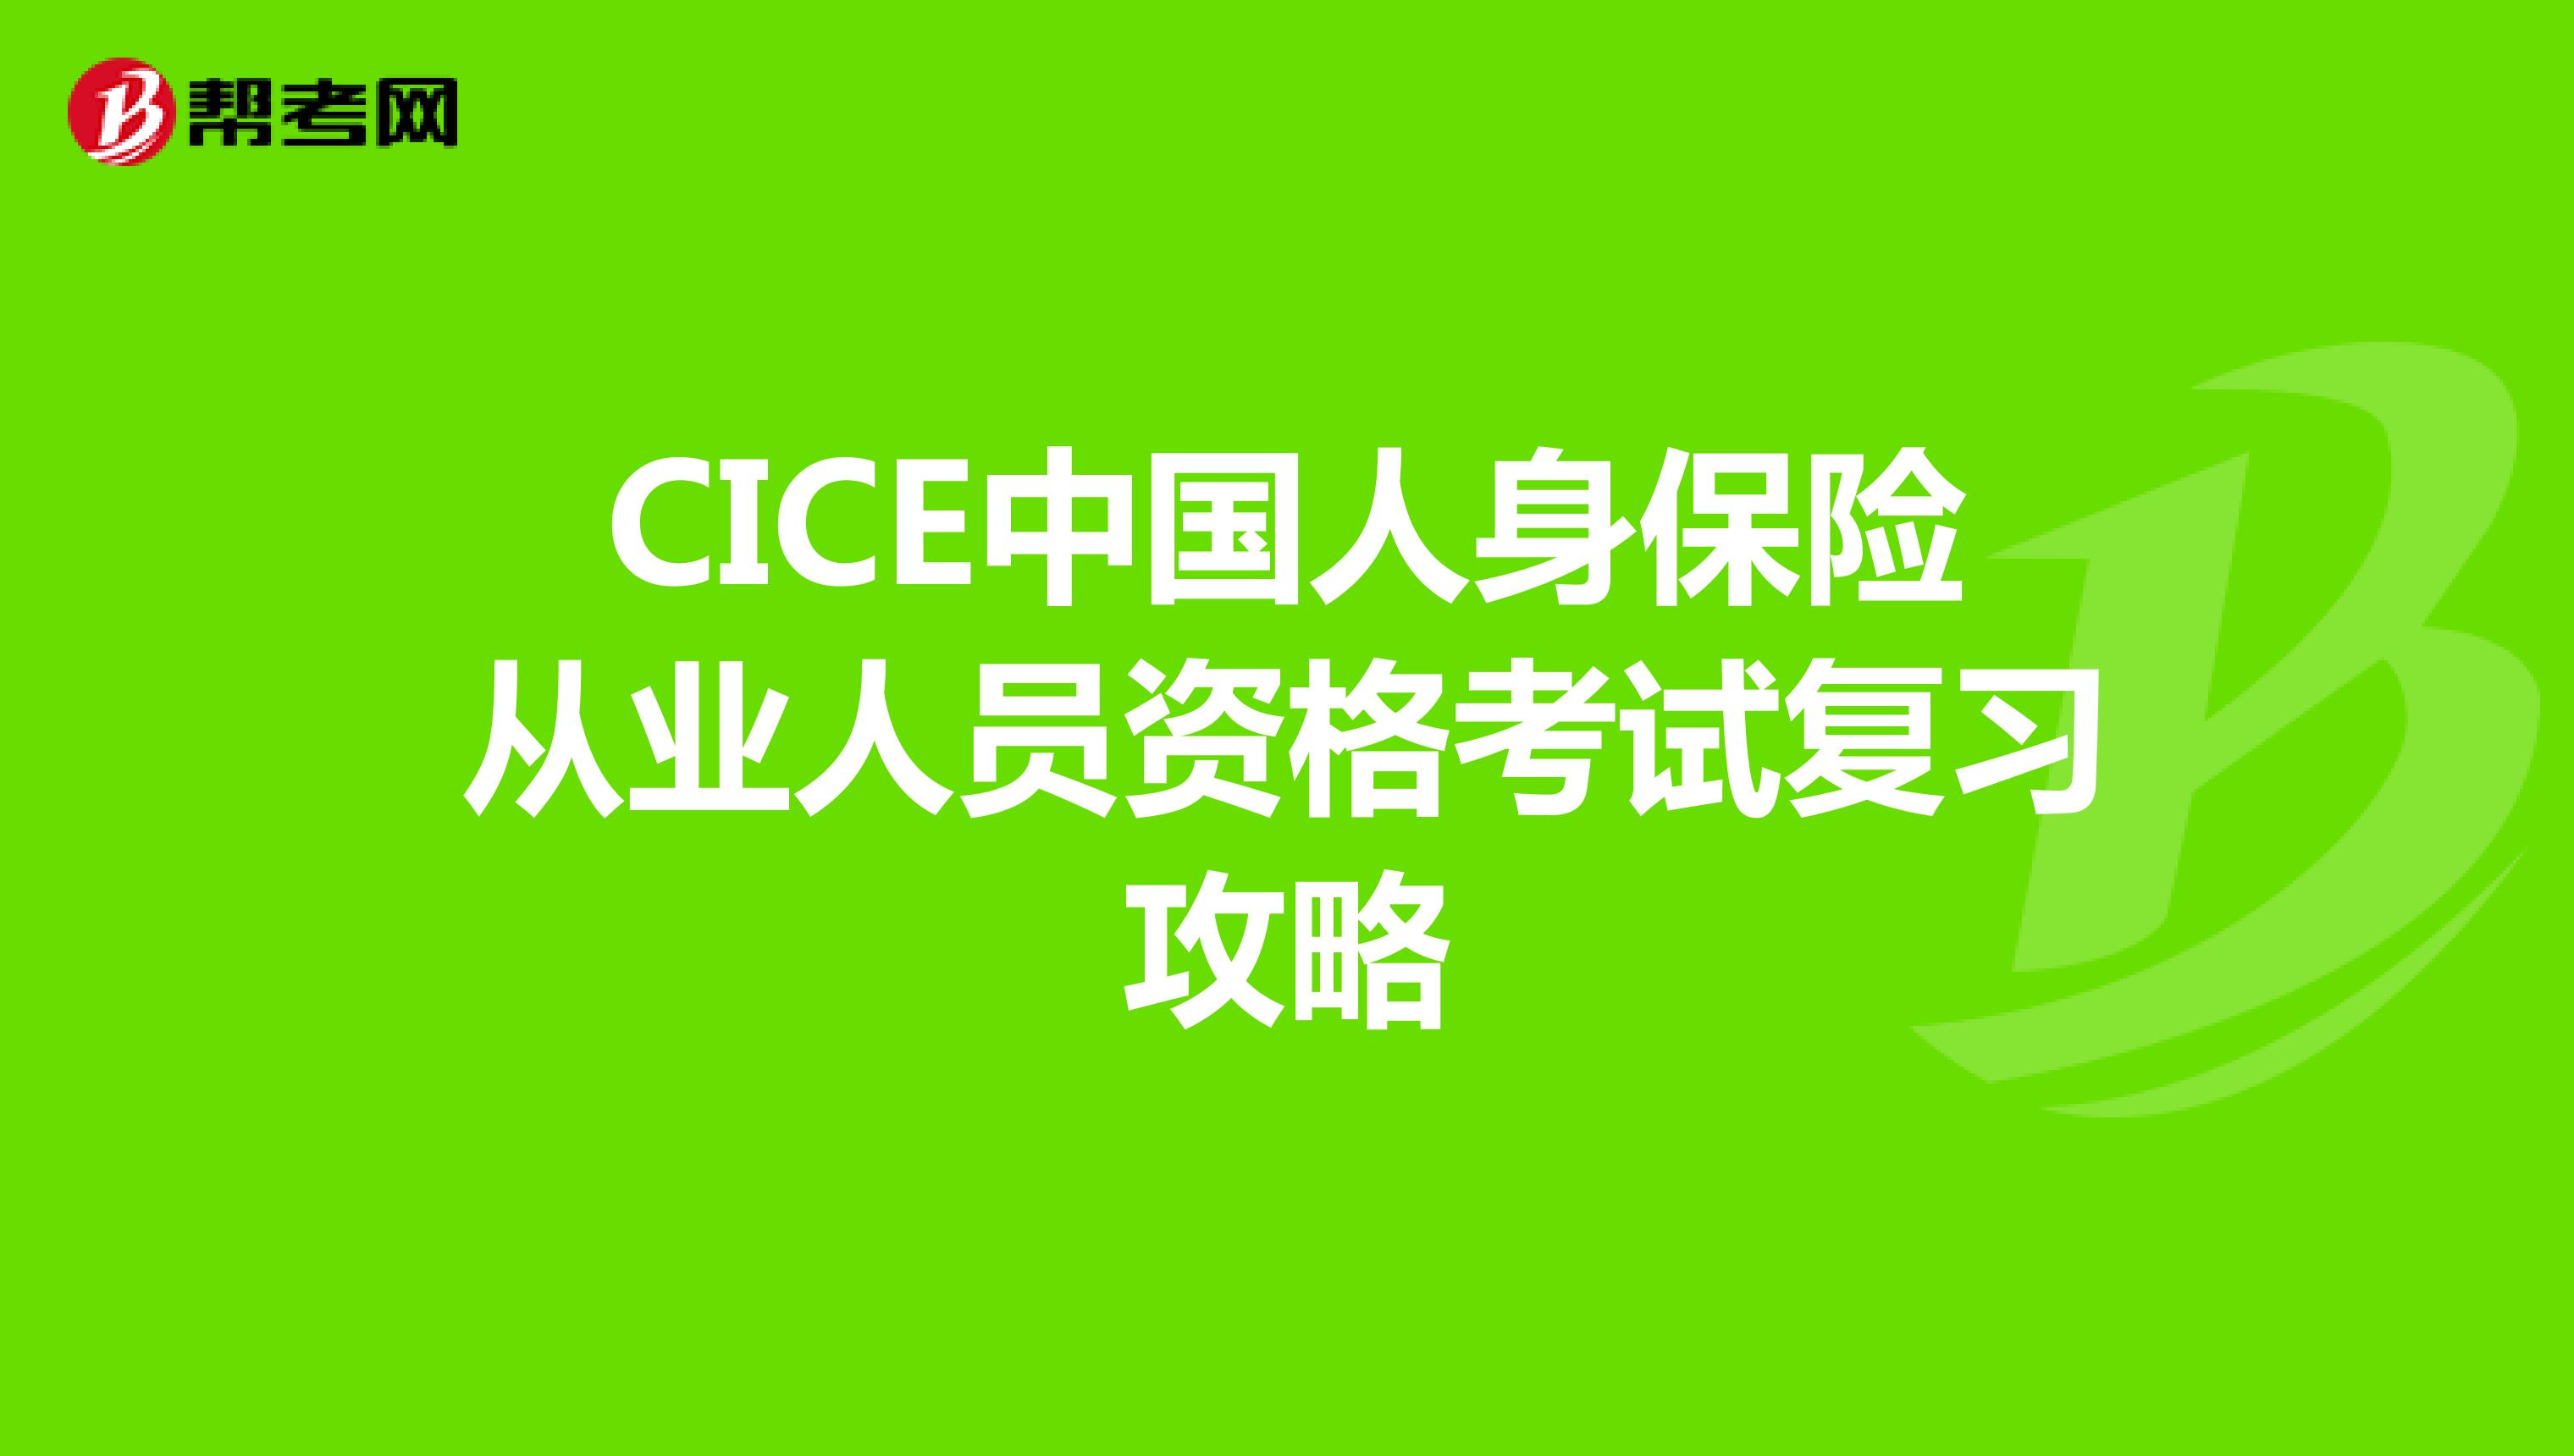 CICE中国人身保险从业人员资格考试复习攻略